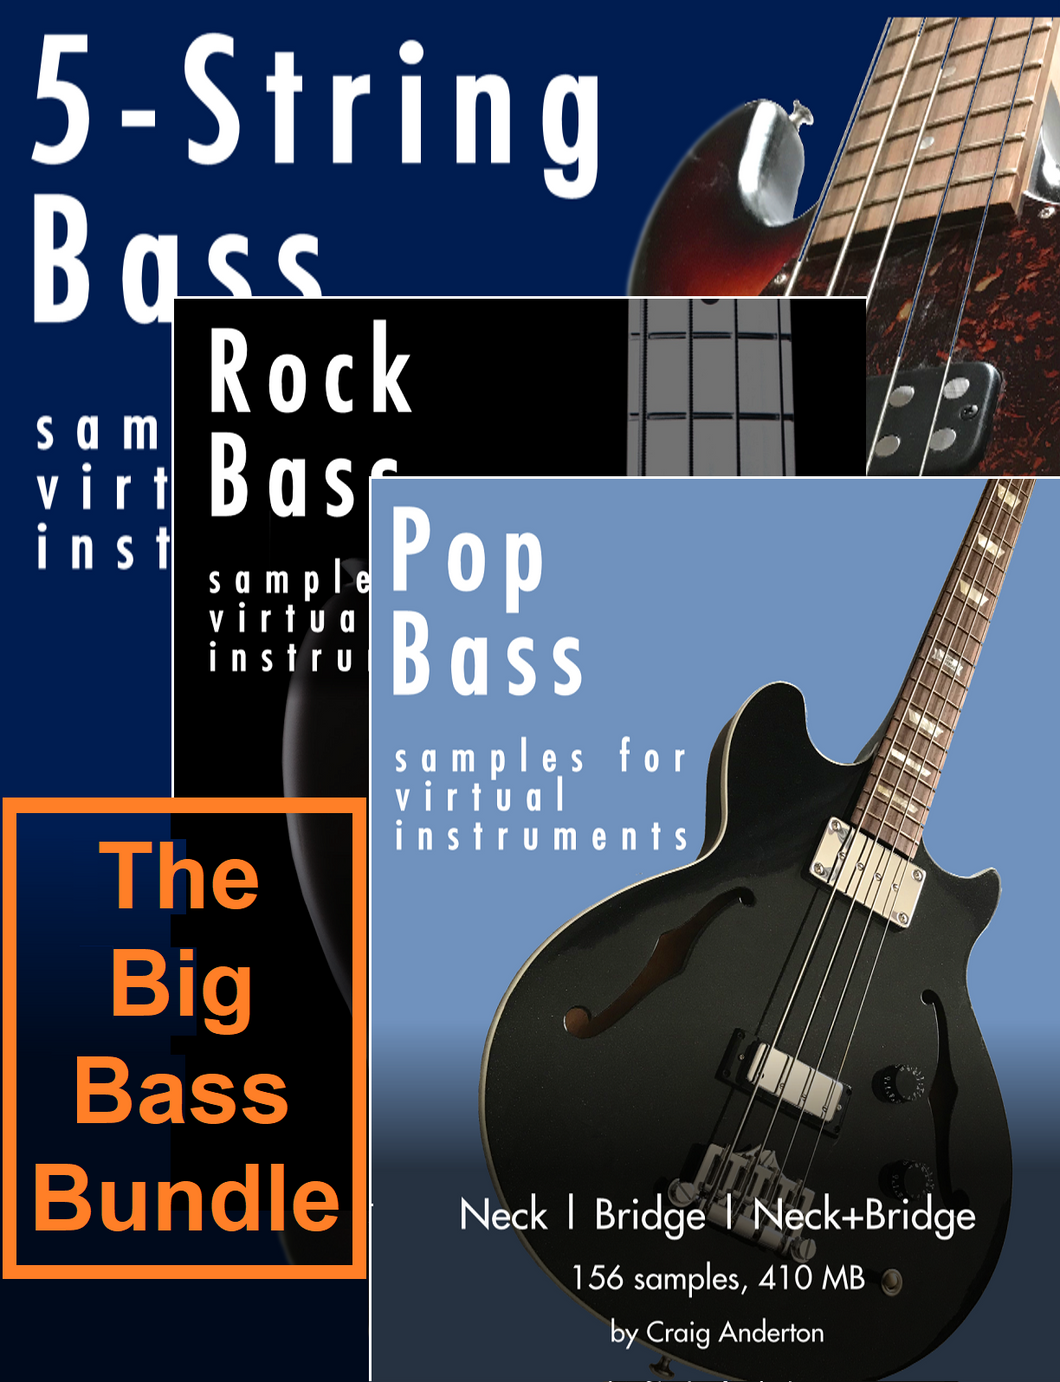 The Big Bass Bundle